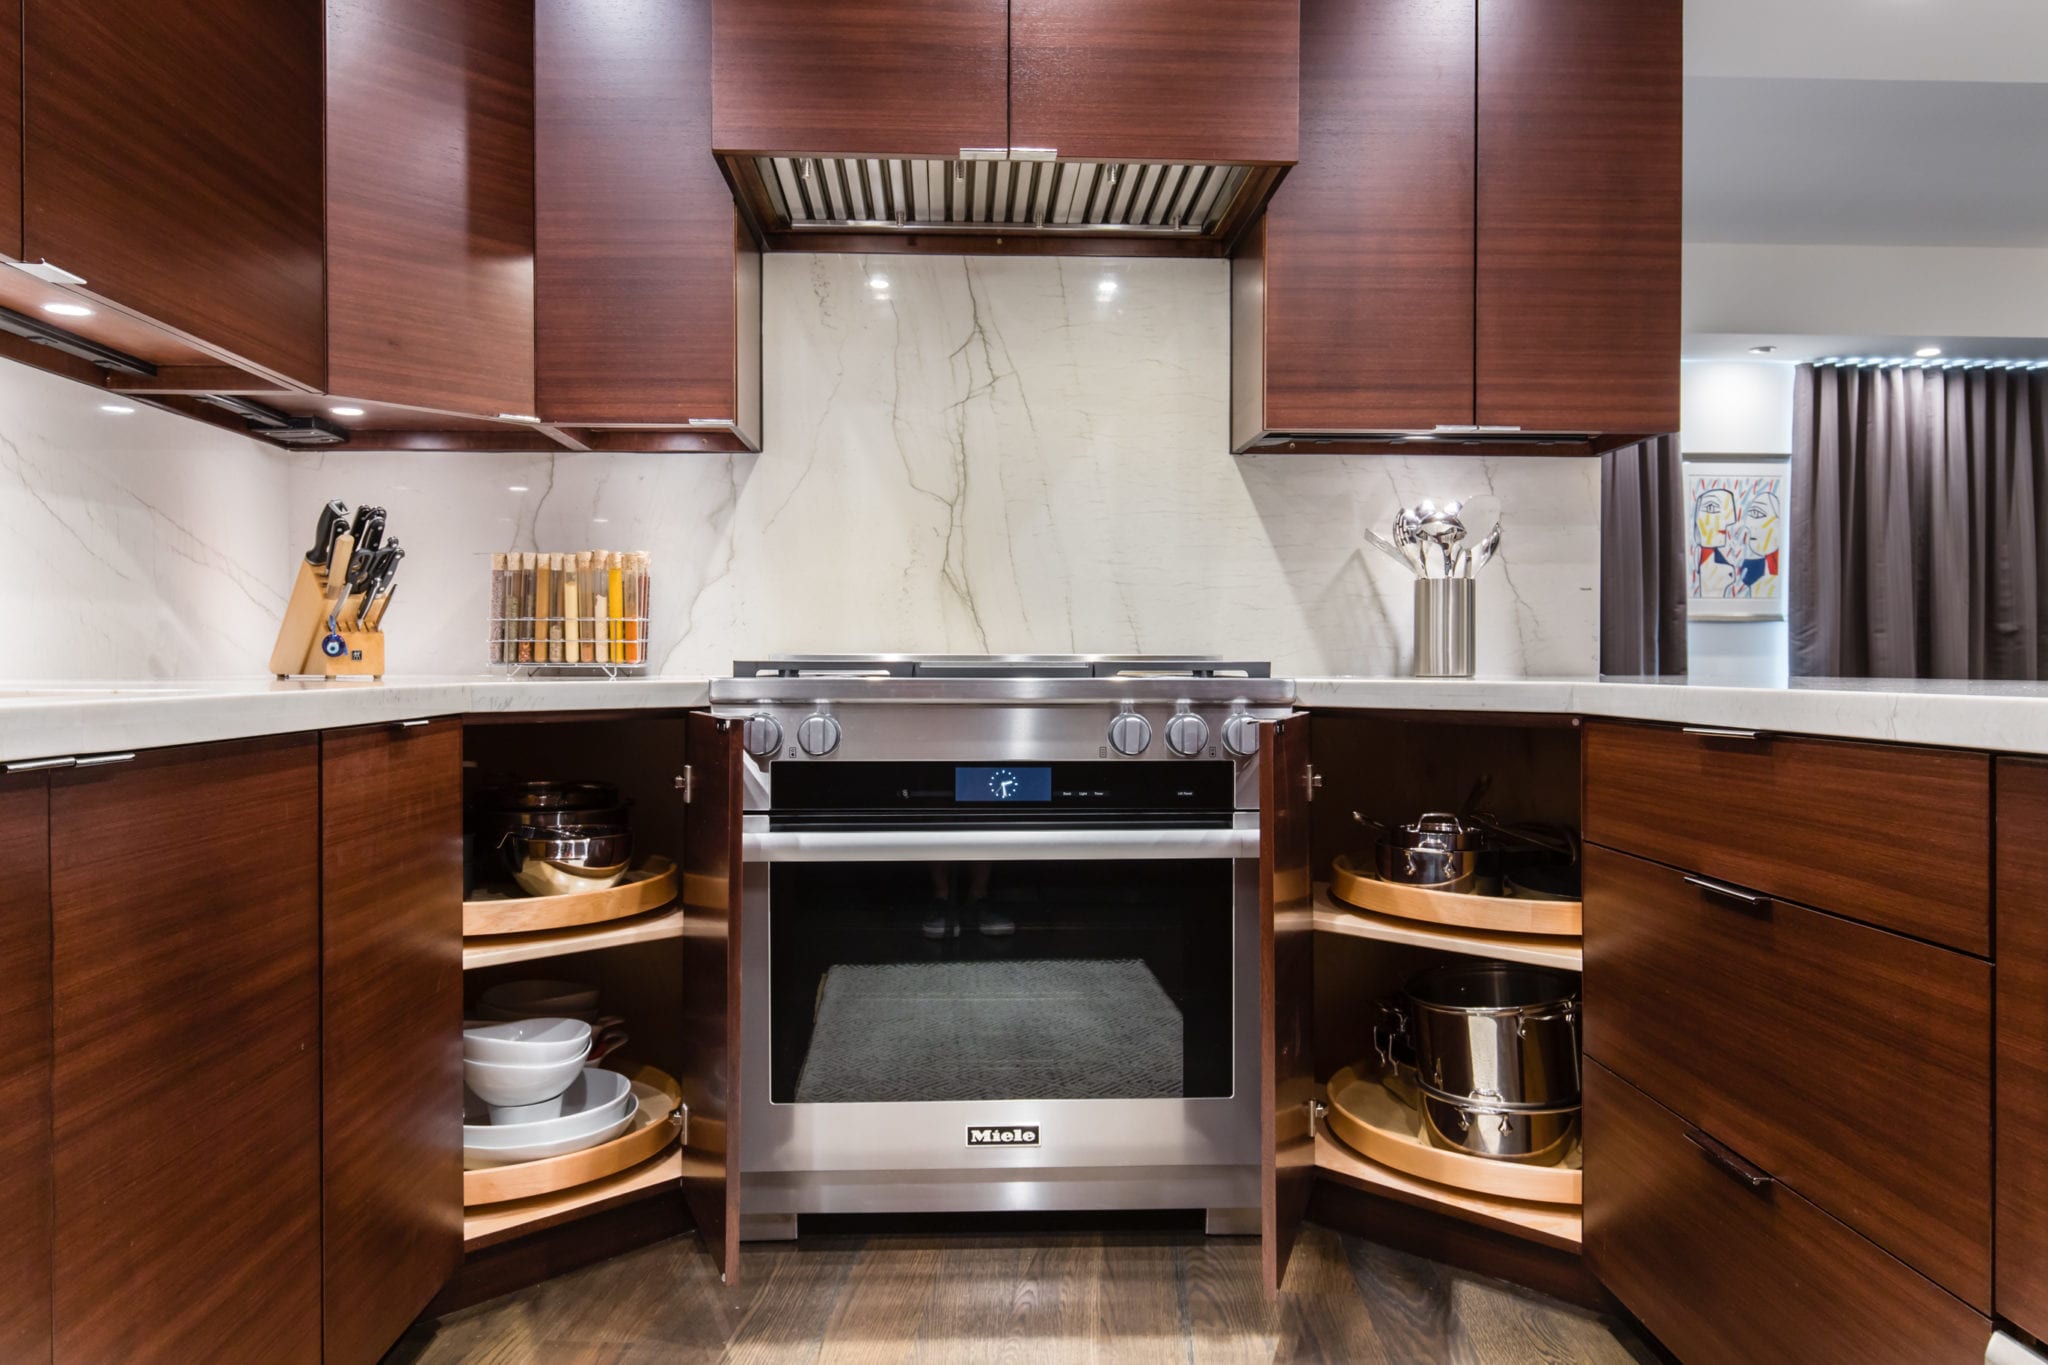 Kitchen-2-story-high-rise-condo-remodel-The-Travis-Katy-Trail-Custom-Corner-Cabinets